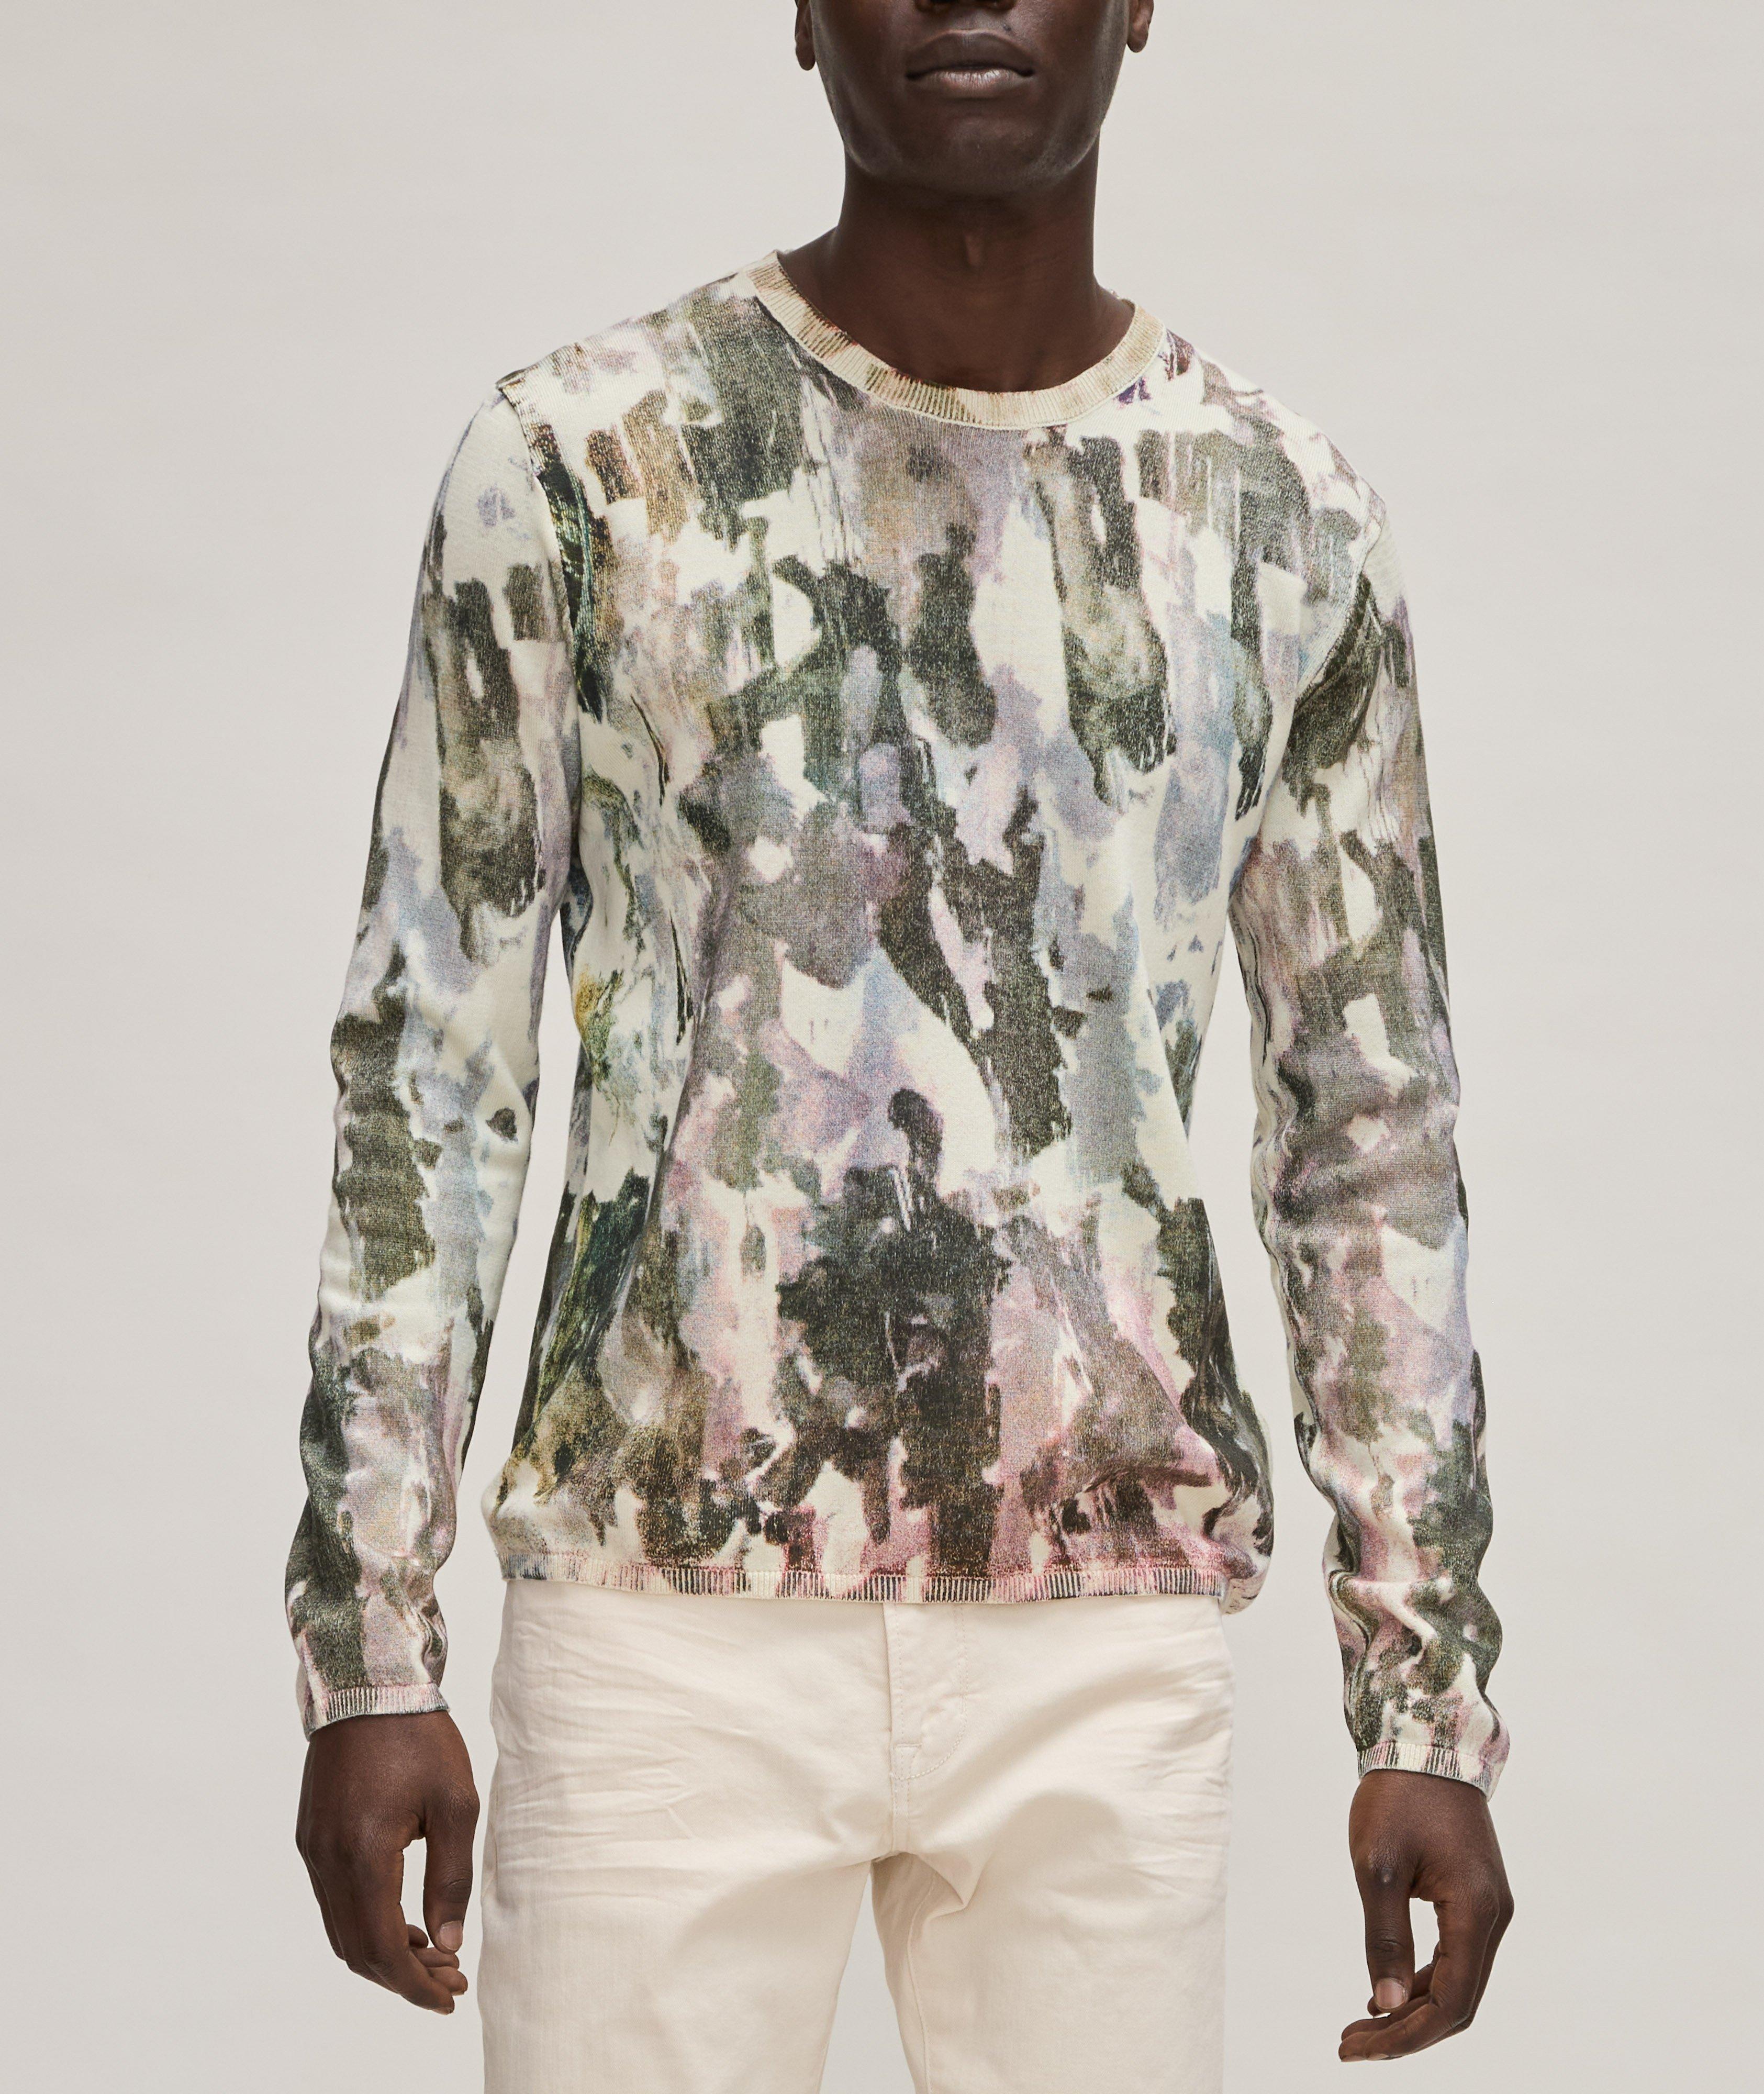 Abstract Camo Cotton Shirt image 1